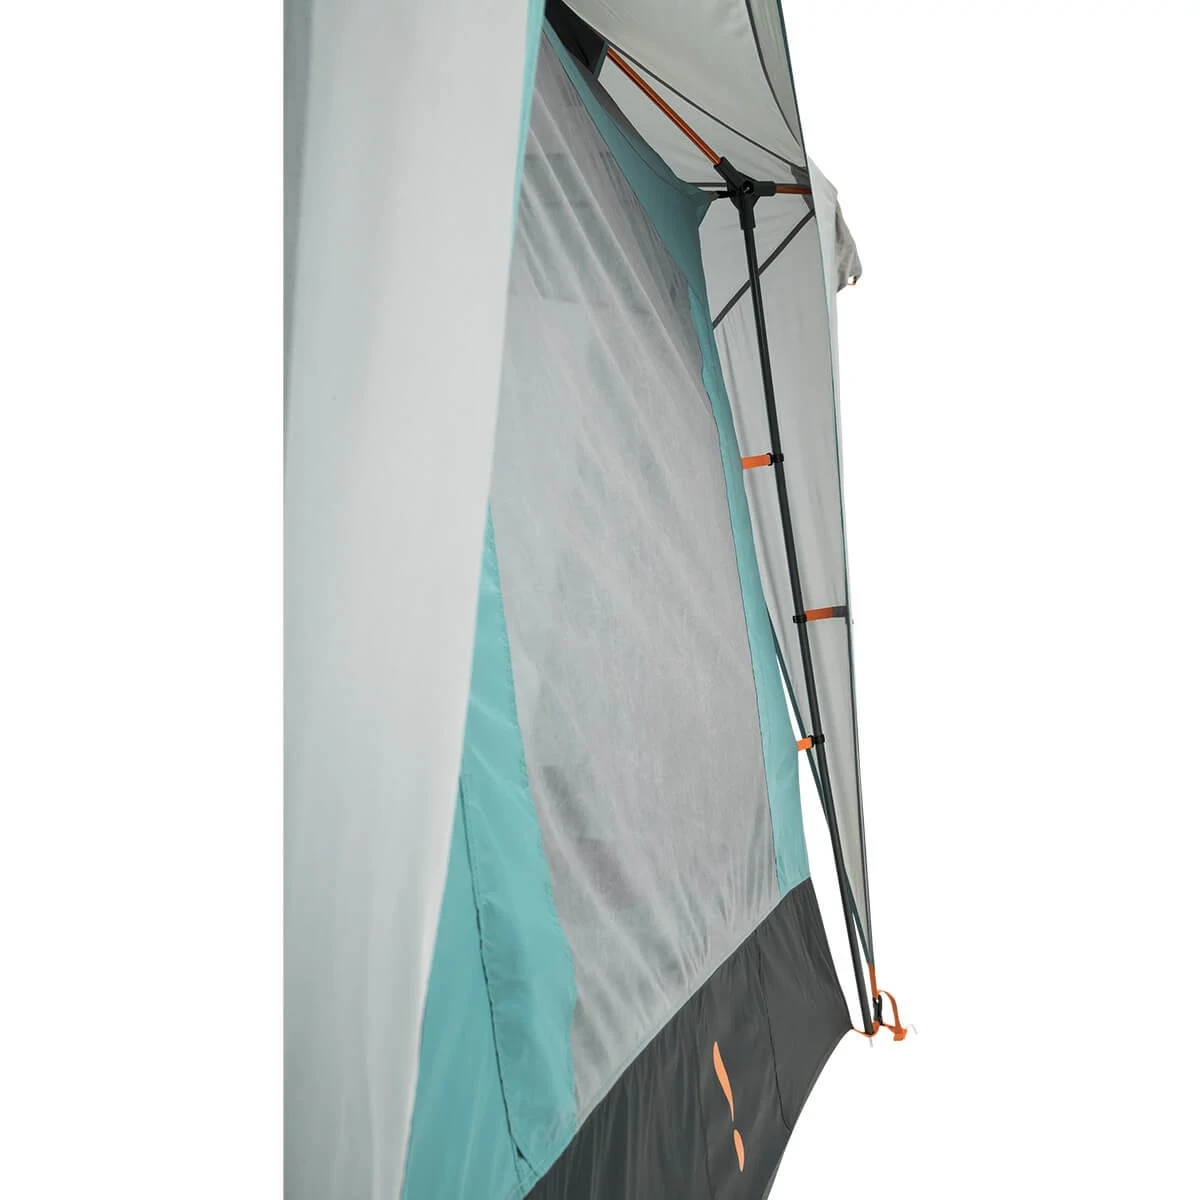 Jade Canyon X4 tent vertical wall